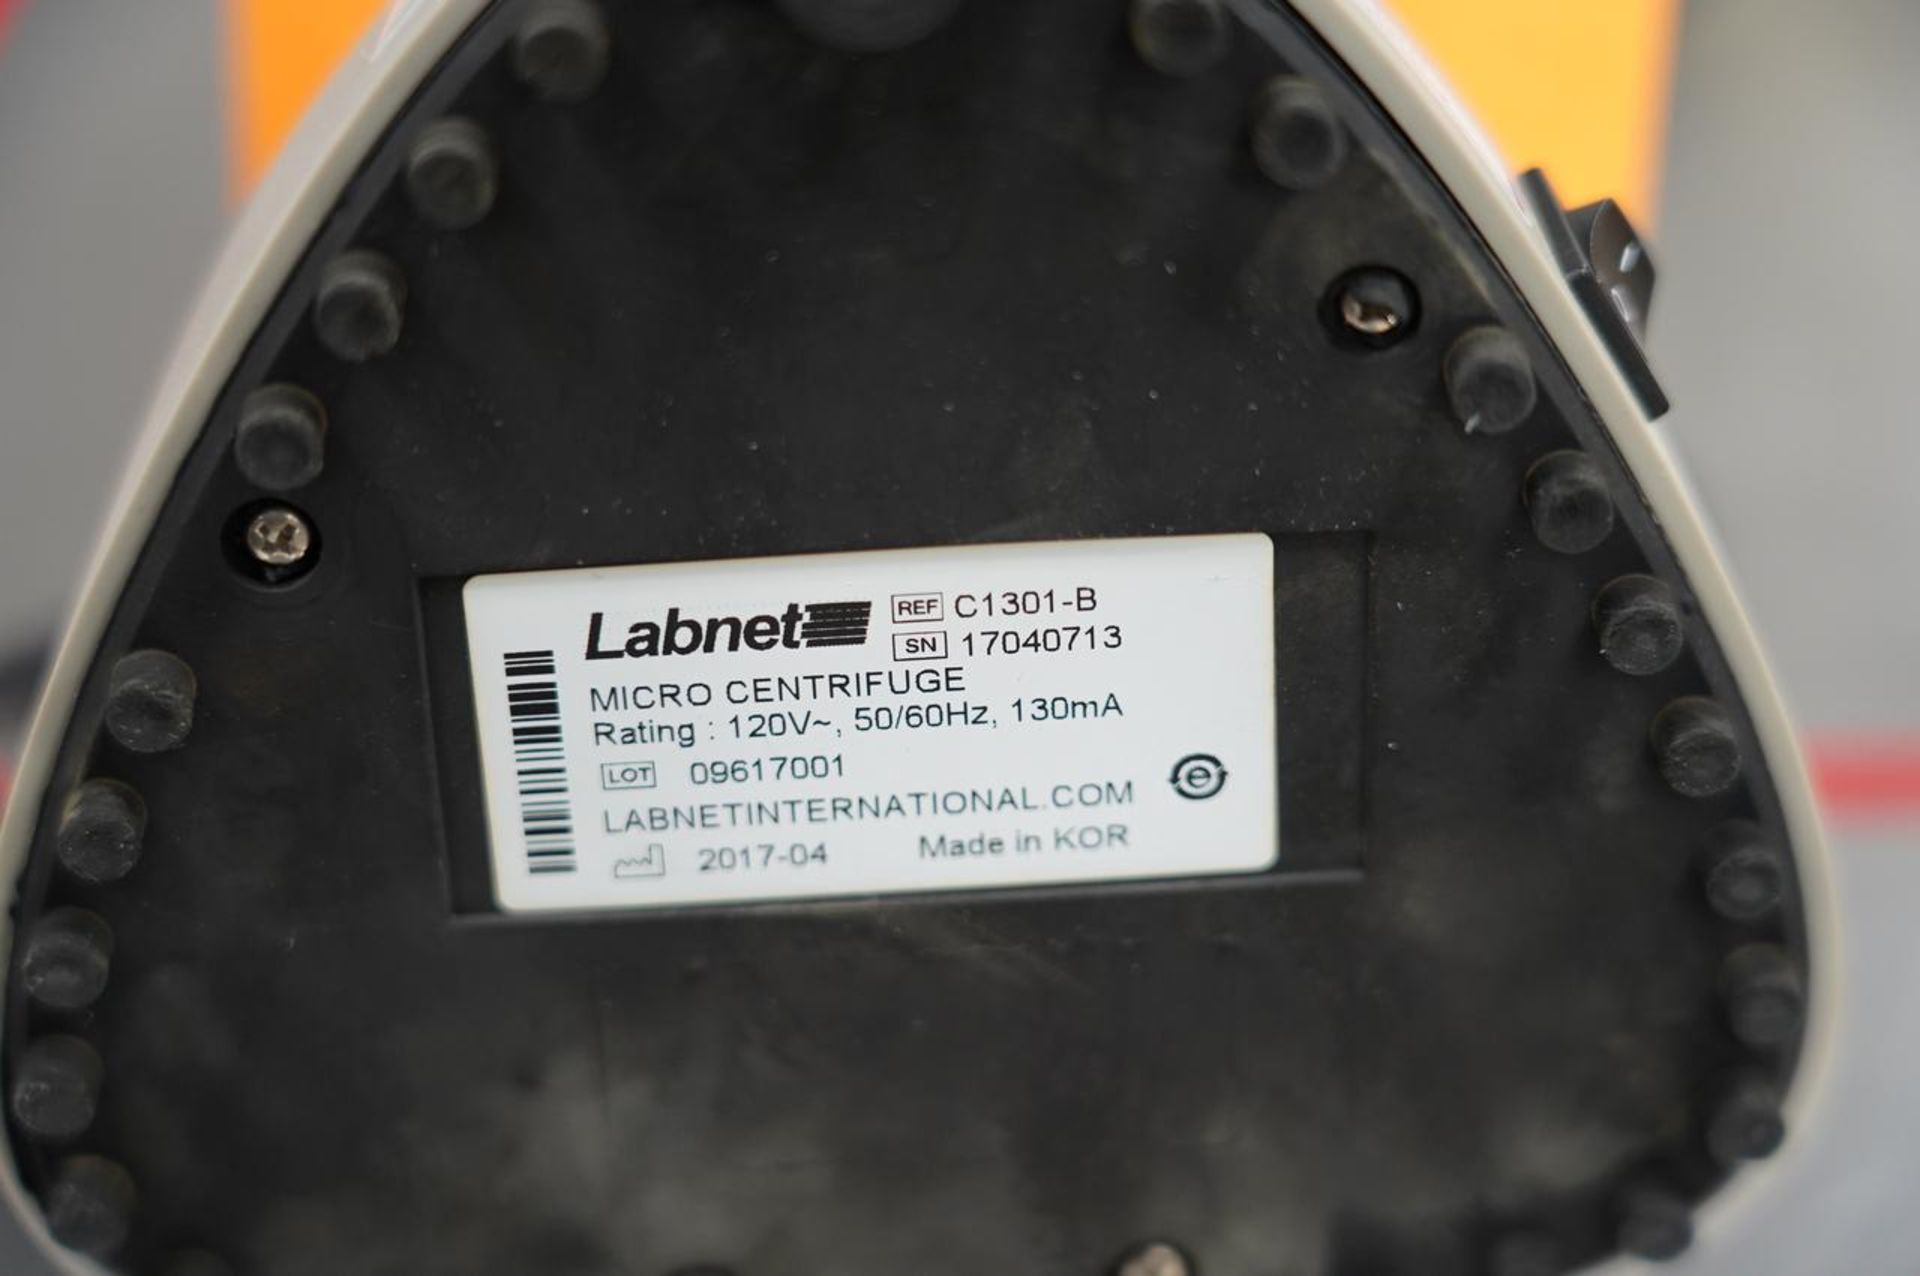 Labnet C1301-B Scientific Mini Centrifuge - Image 4 of 4